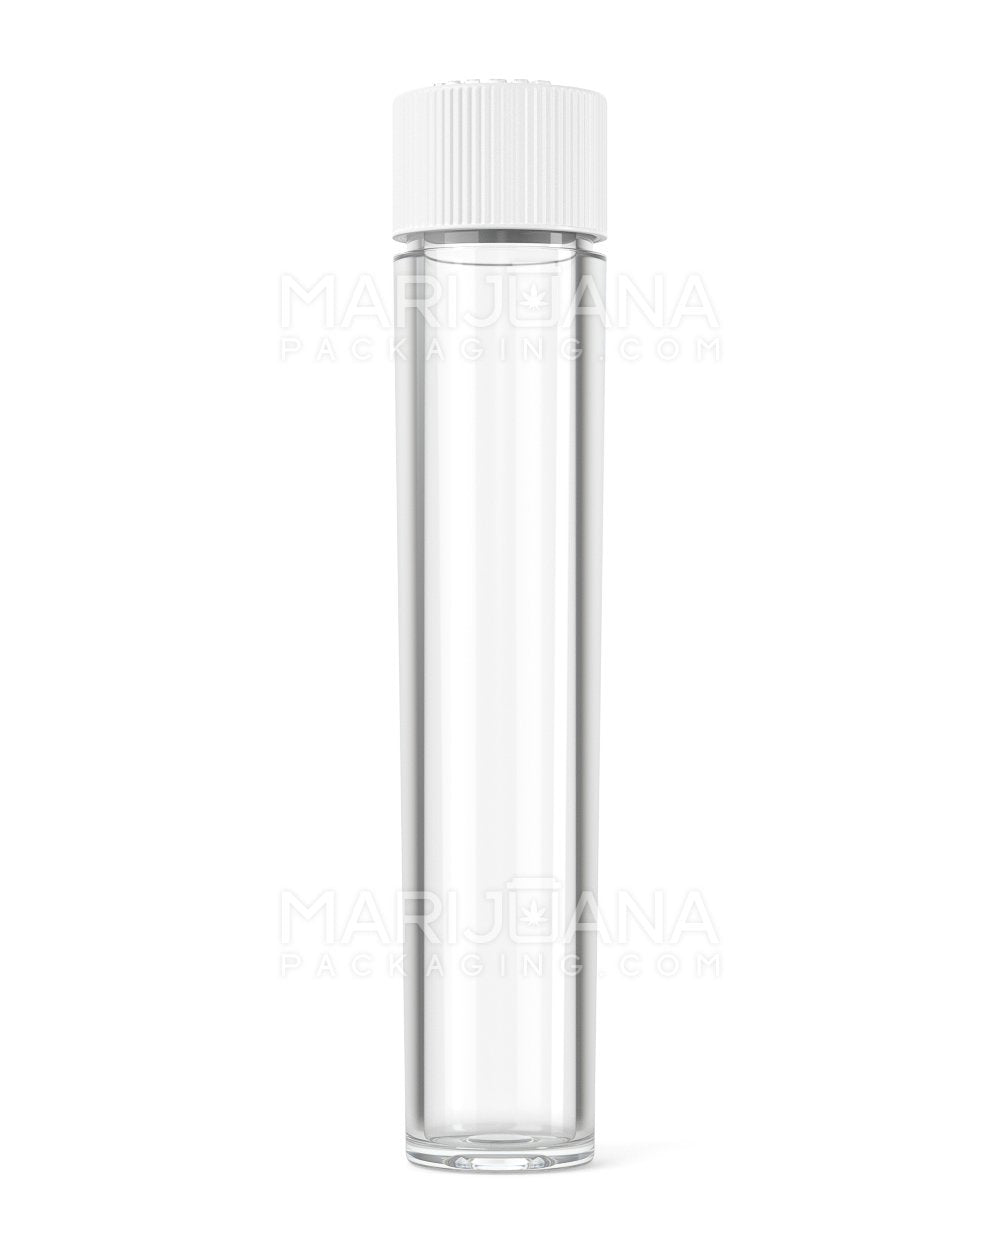 Child Resistant Push Down & Turn Vape Cartridge Tube w/ White Cap | 90mm - Clear | Sample - 1